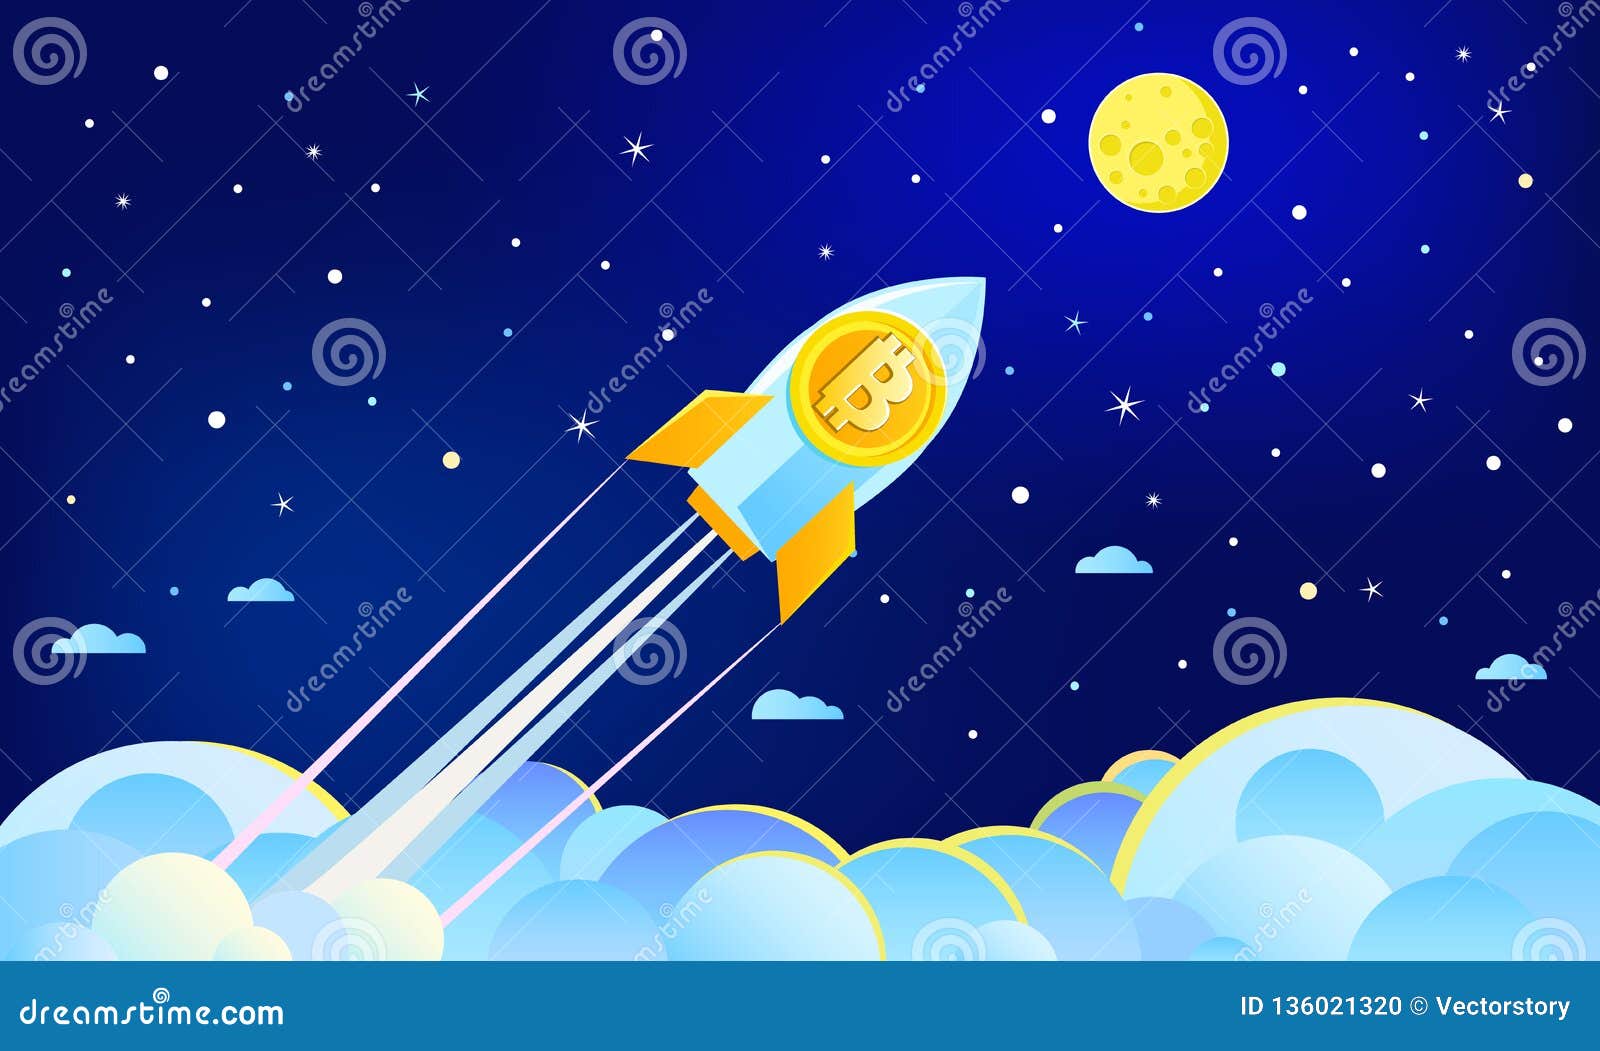 moon bitcoin hack bitcoin market cap max